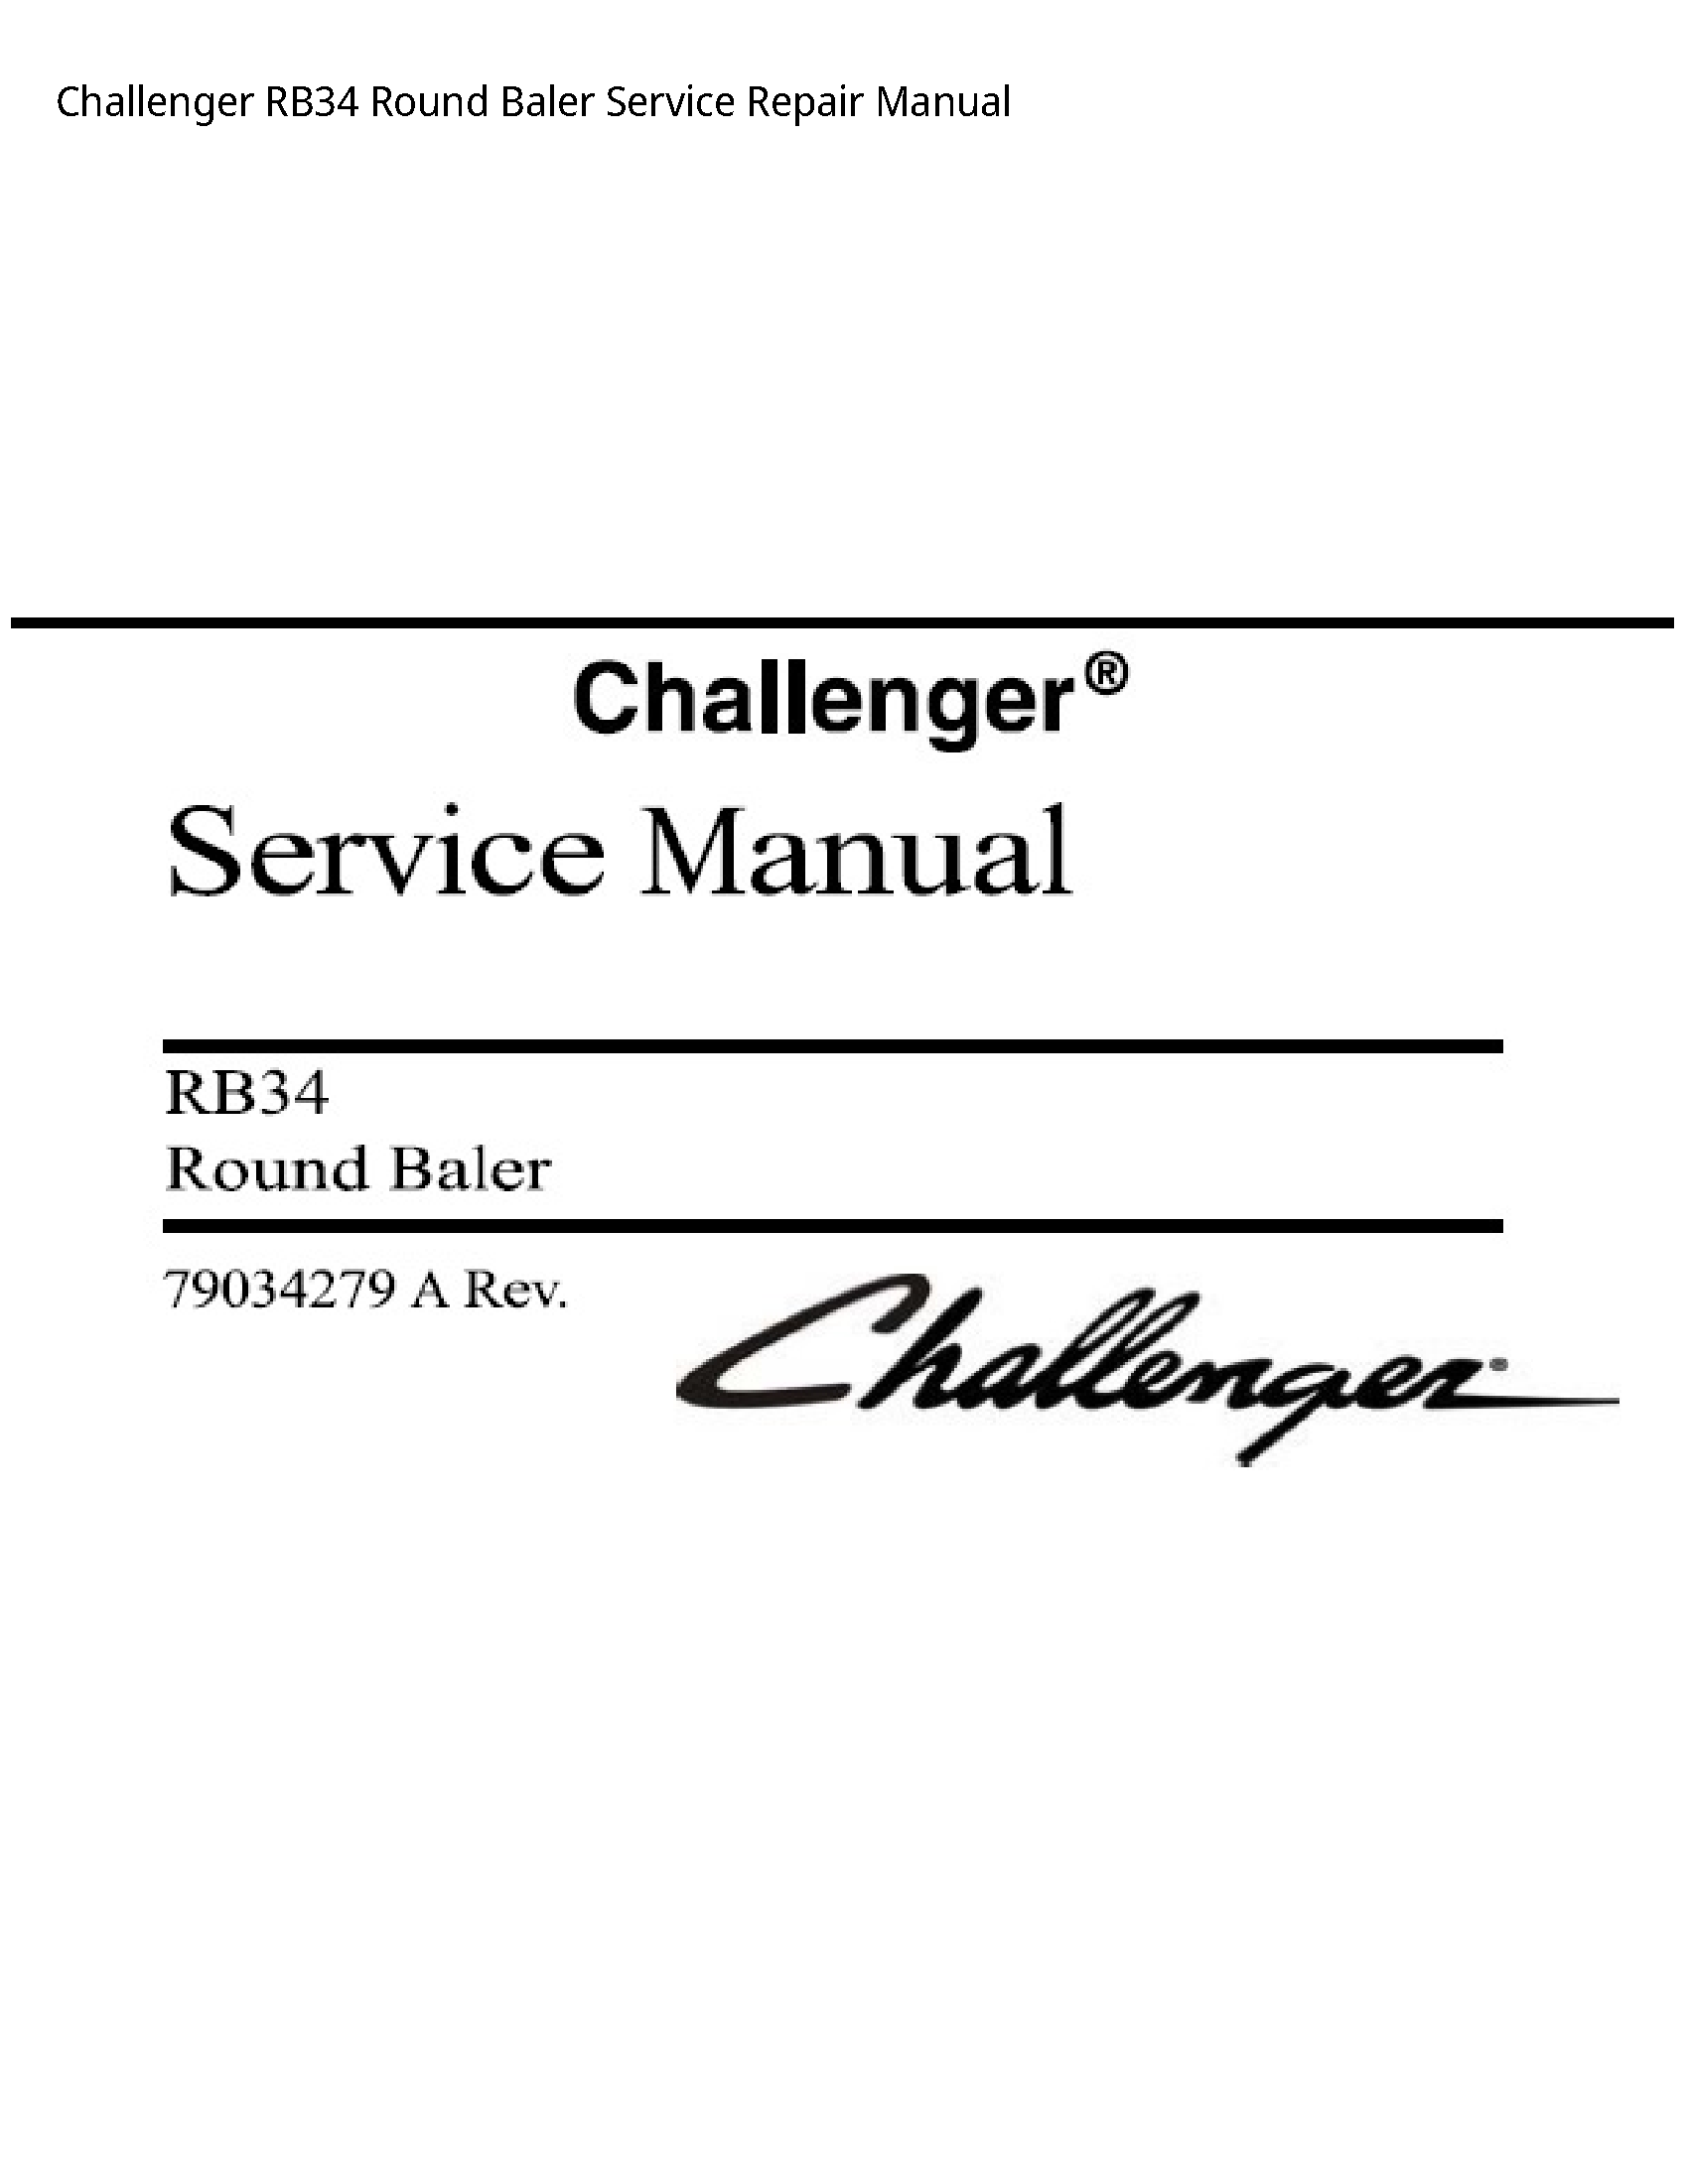 Challenger RB34 Round Baler manual